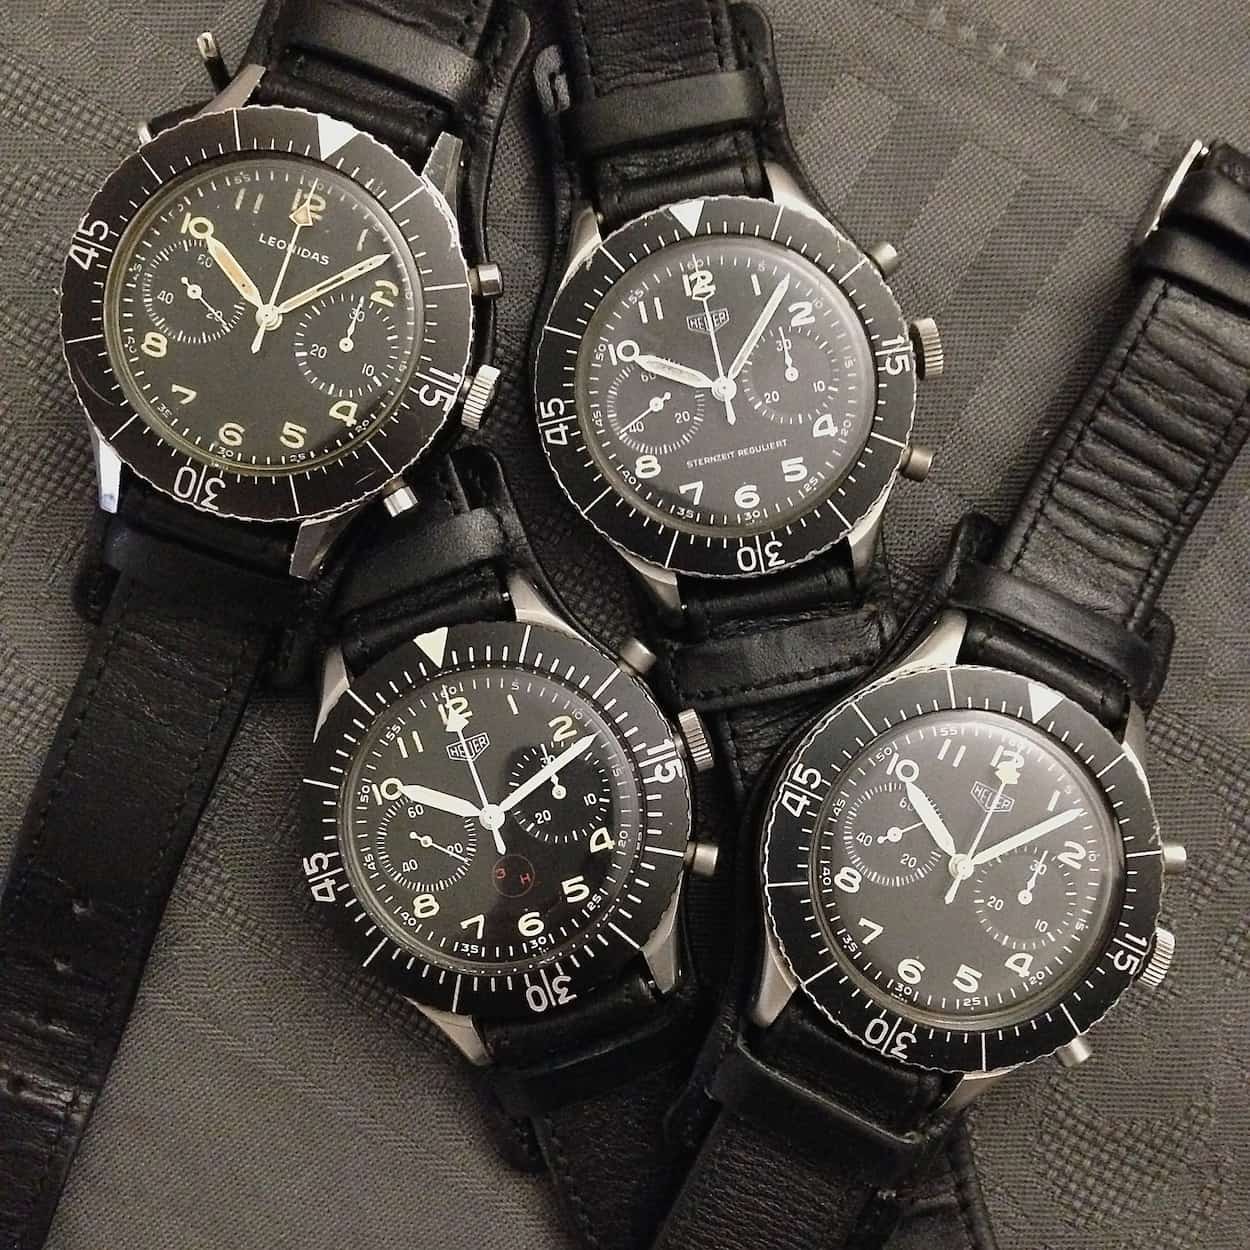 The Military Chronograph Wristwatch | WatchGecko